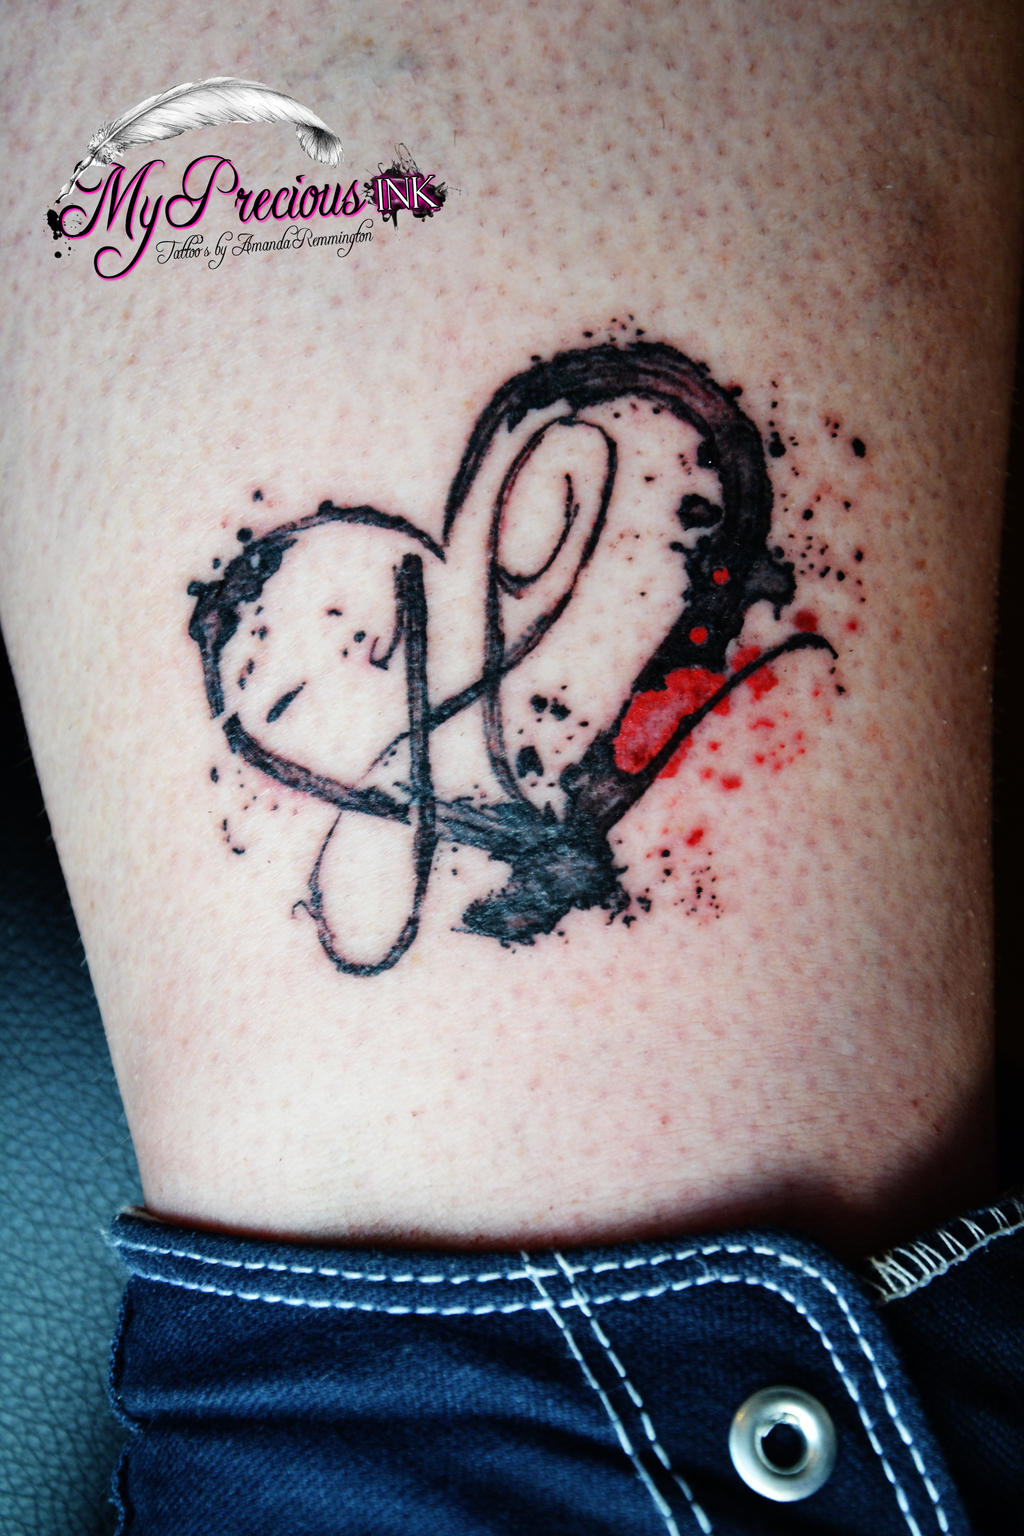 Heart Paintbrush Tattoo by Mentjuh on DeviantArt